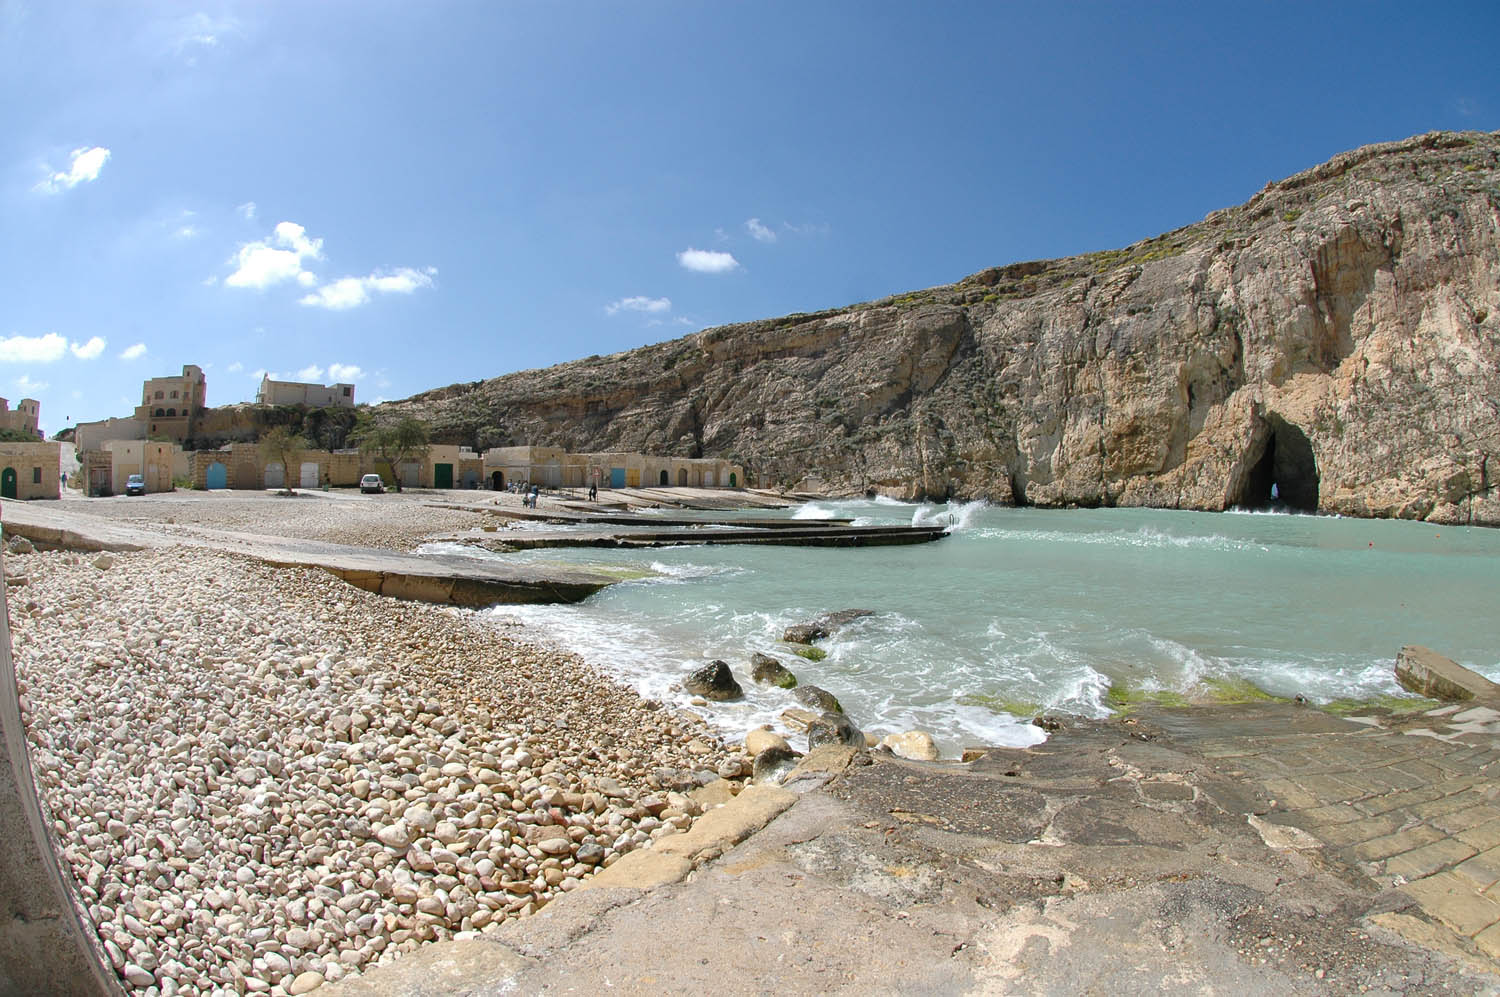 Agora a Inland Sea vista de baixo. Gozo, Malta | foto: © viewingmalta.com